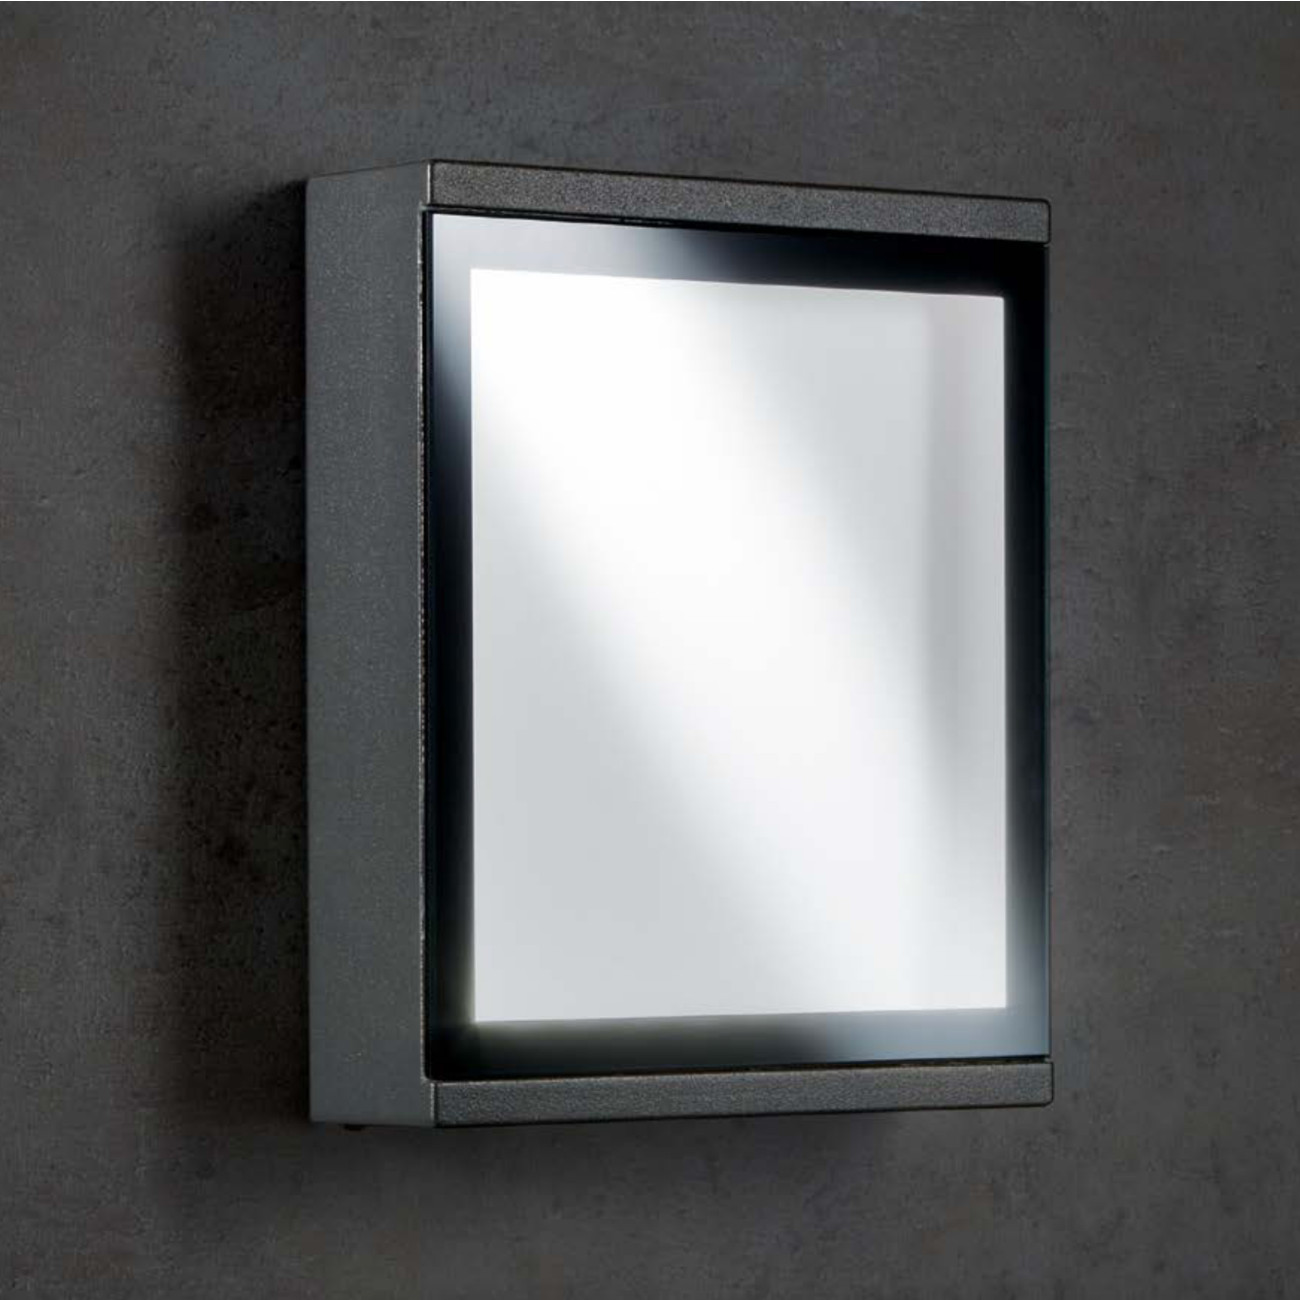 Flat LED wall light